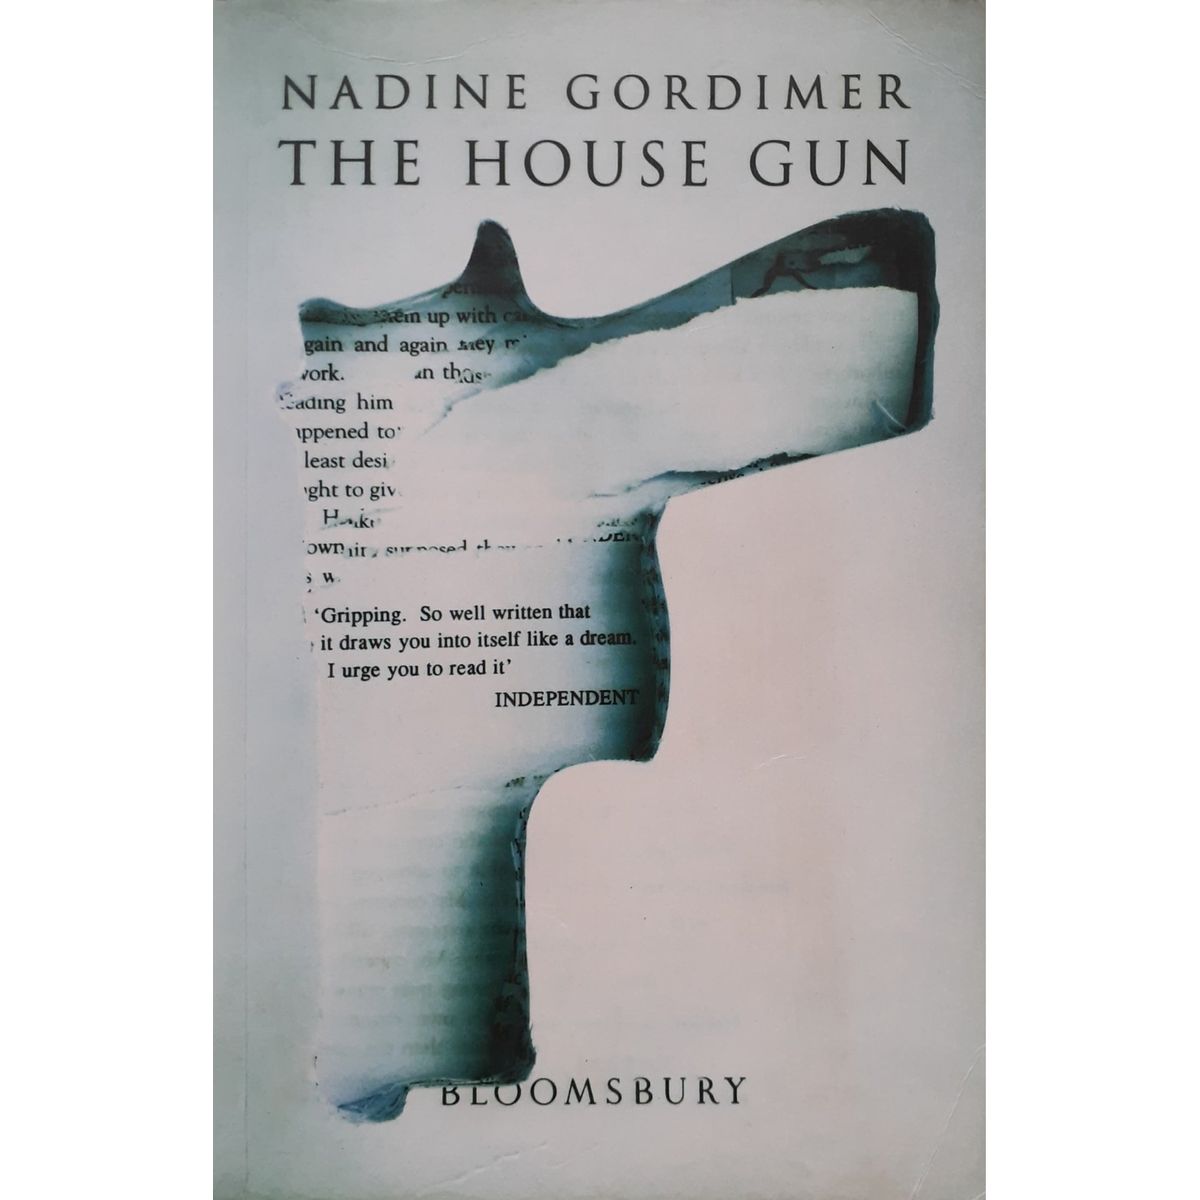 ISBN: 9780747542575 / 0747542570 - The House Gun by Nadine Gordimer [1999]